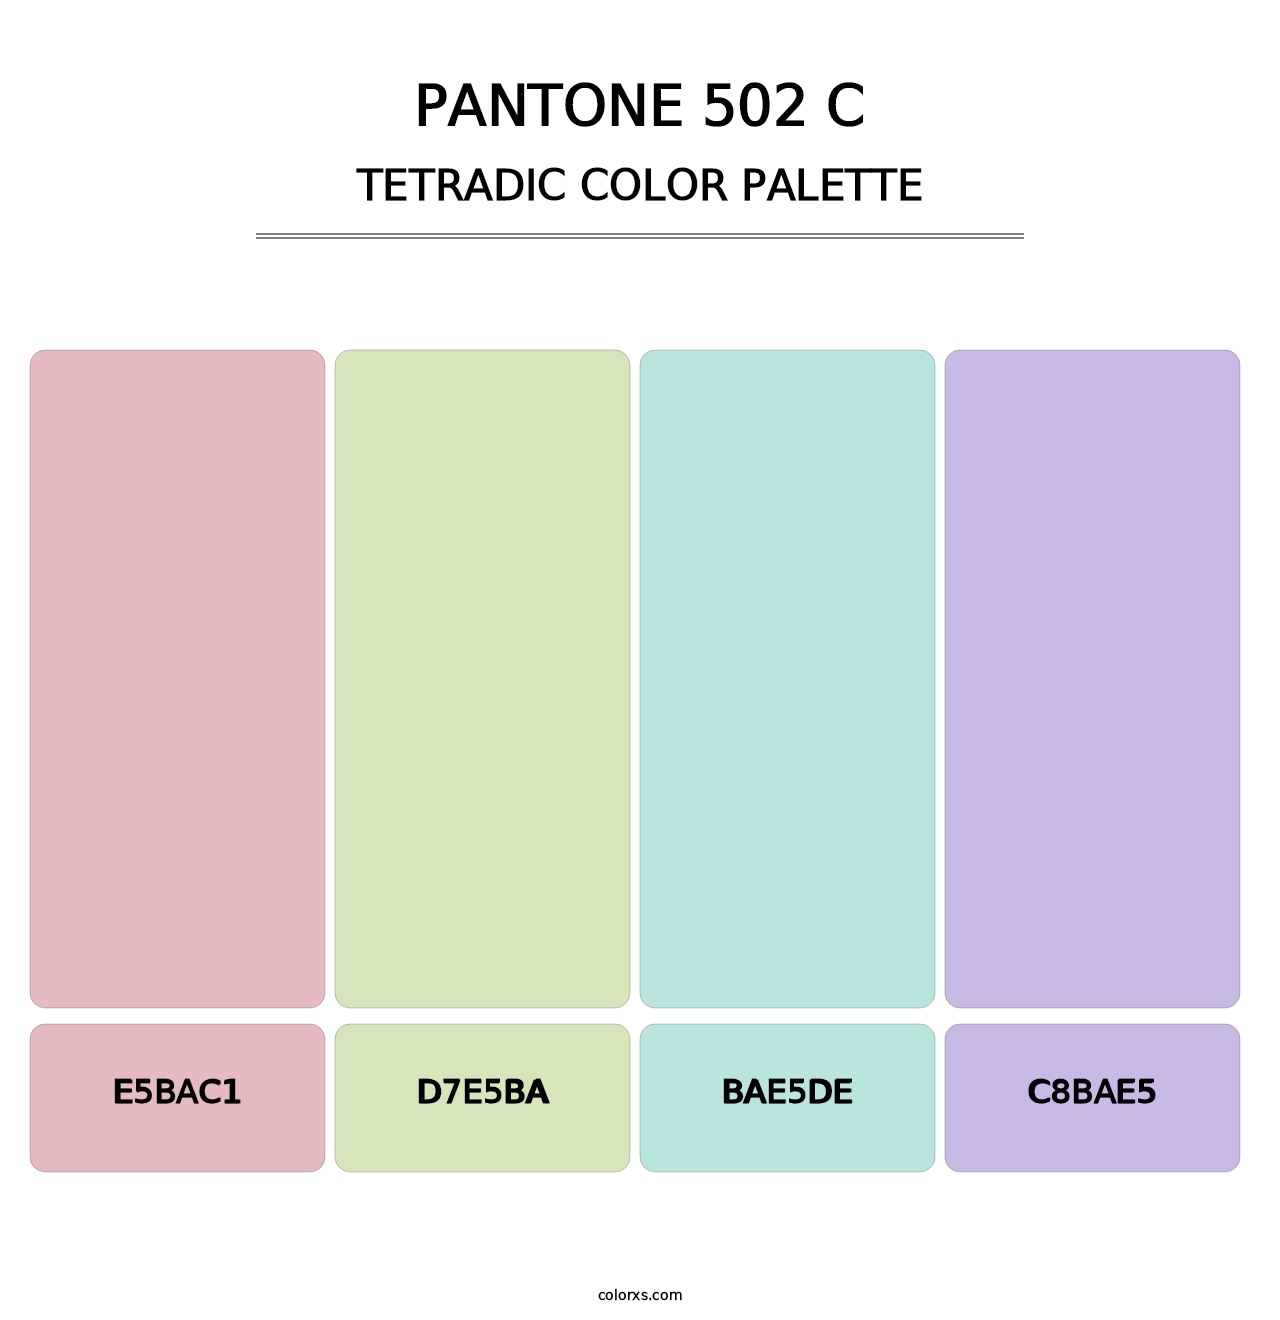 PANTONE 502 C - Tetradic Color Palette